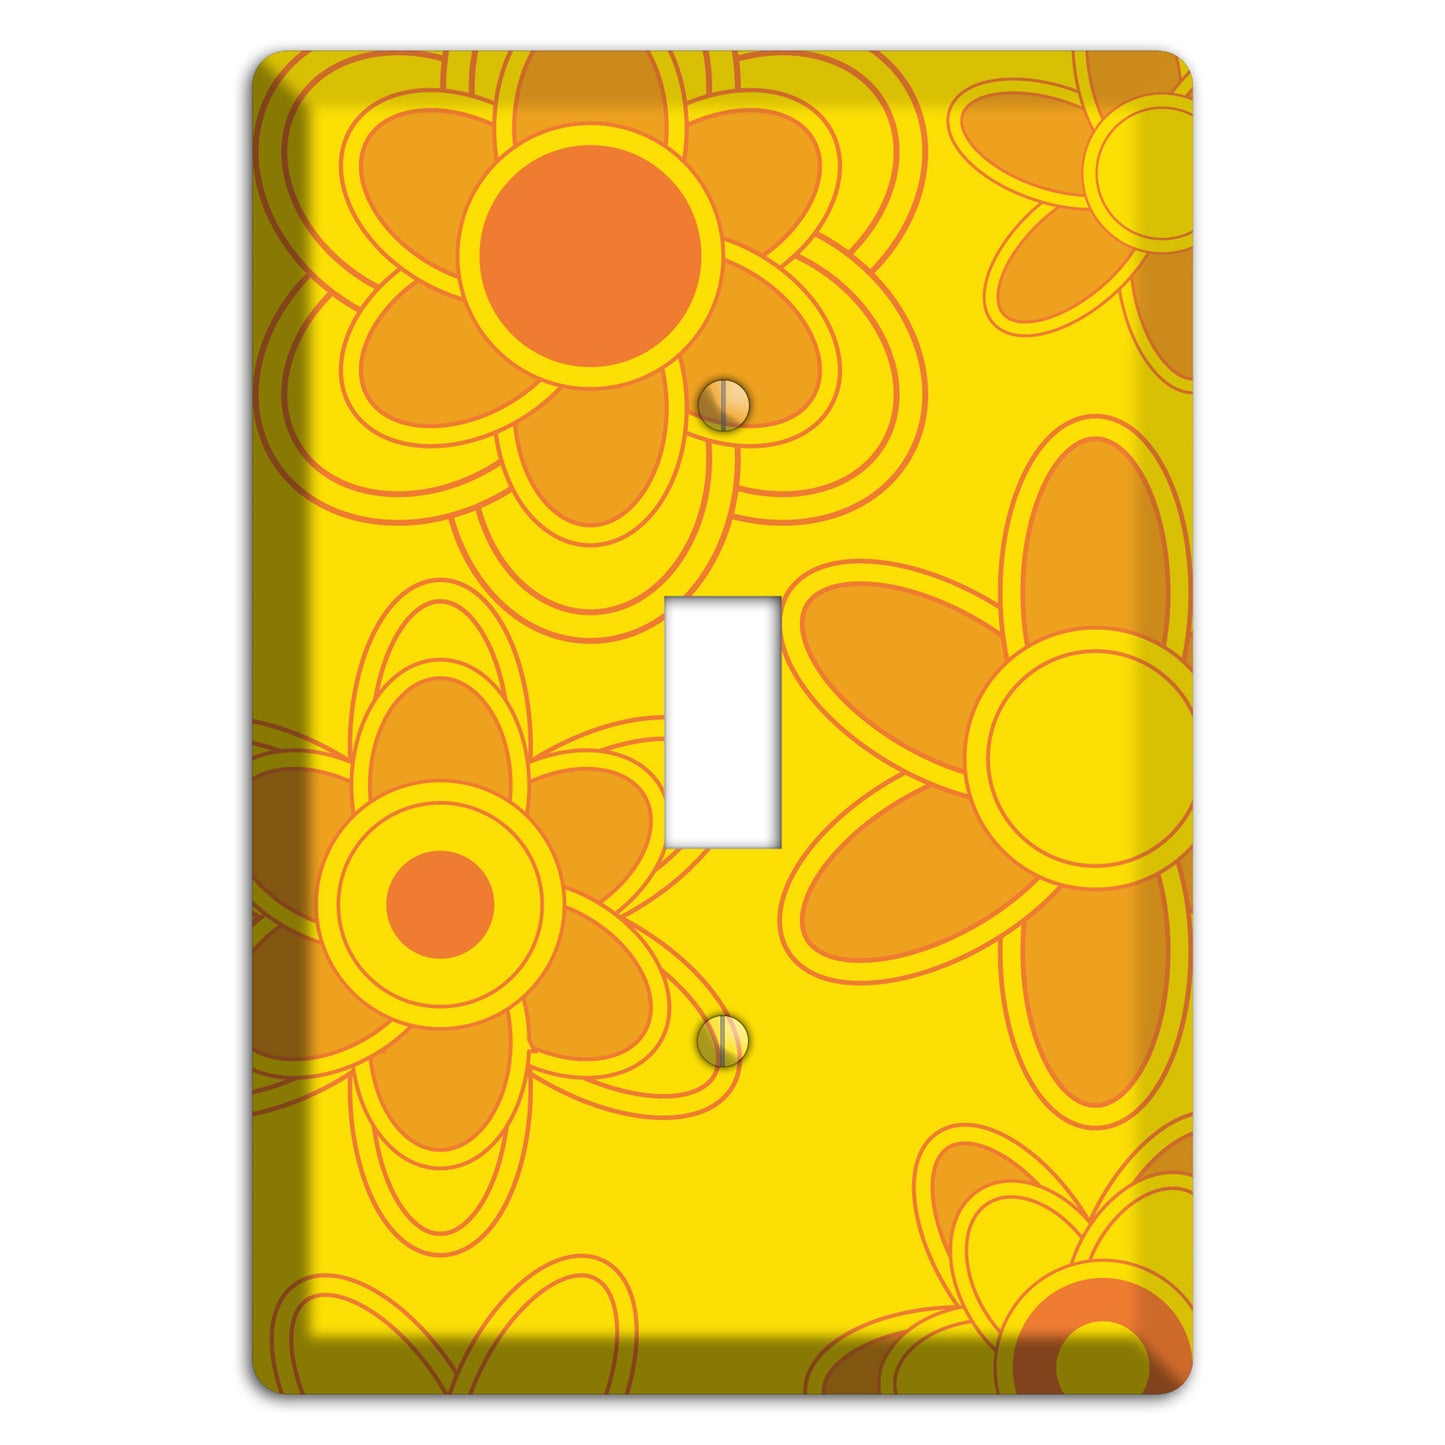 Yellow with Orange Retro Floral Contour Cover Plates